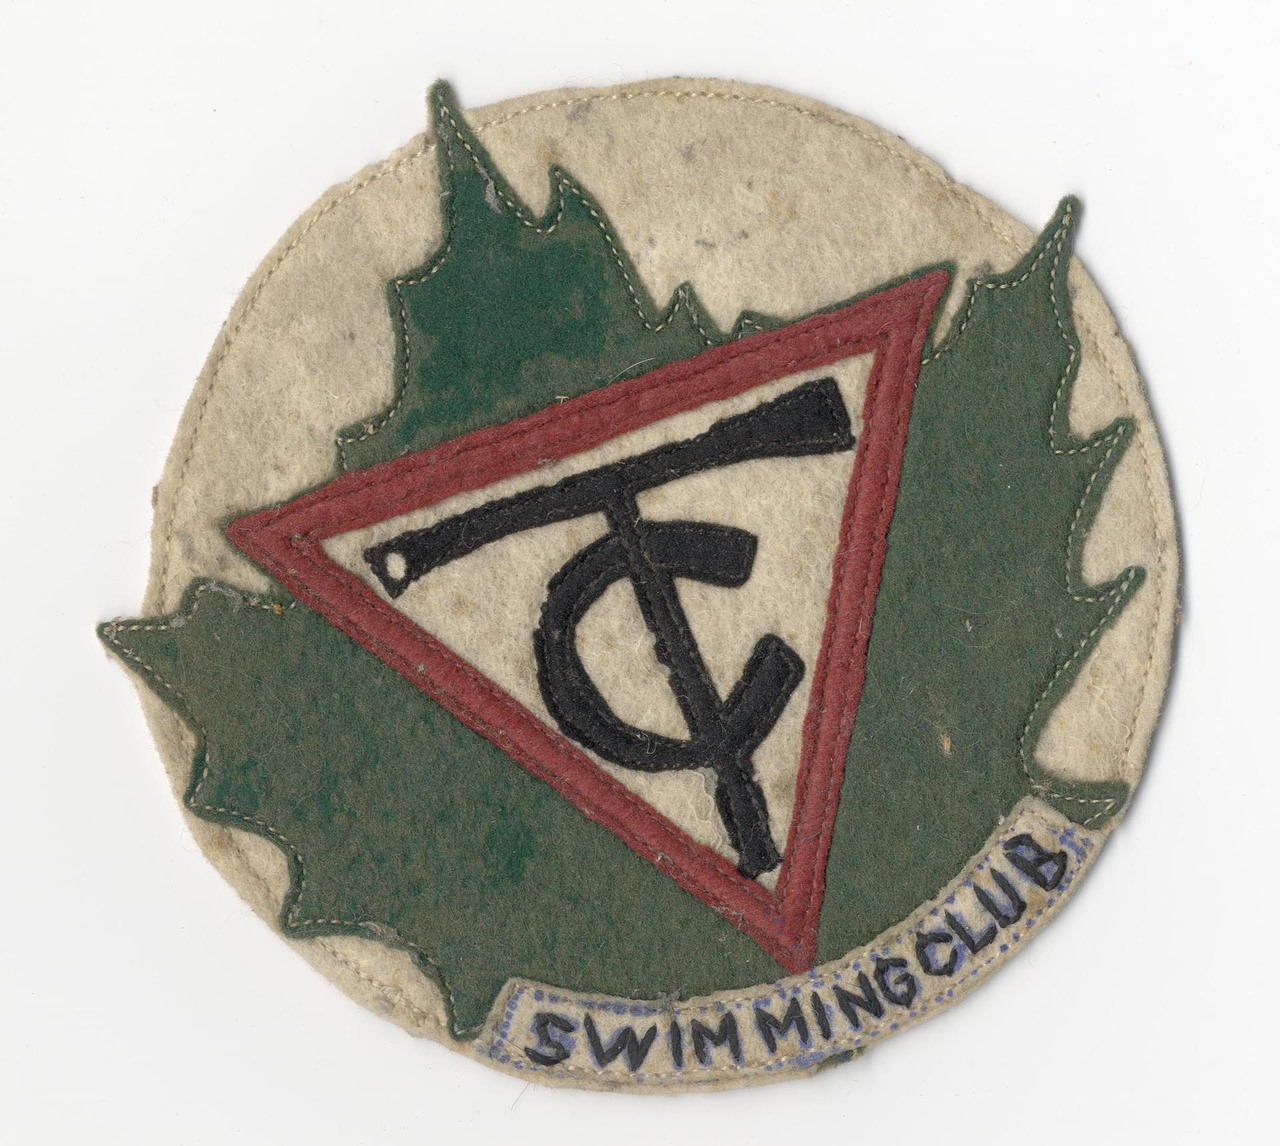 Central Toronto YMCA Swimming Club badge <br />
